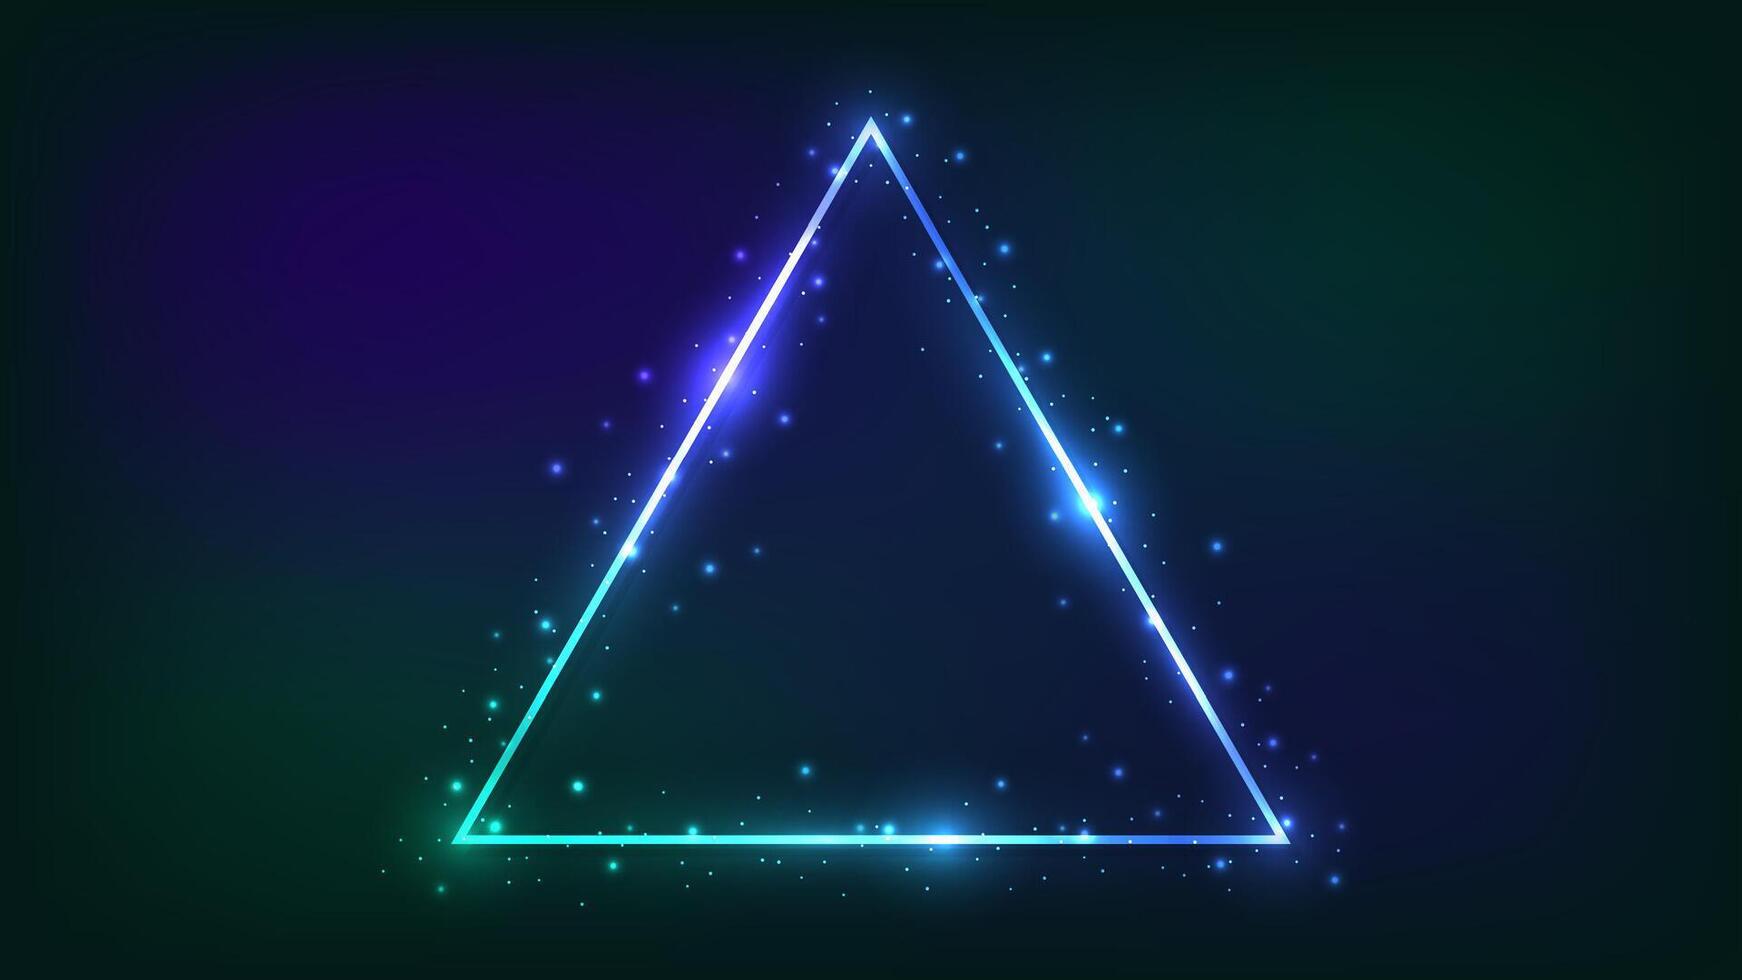 neon triangel- ram med lysande effekter vektor